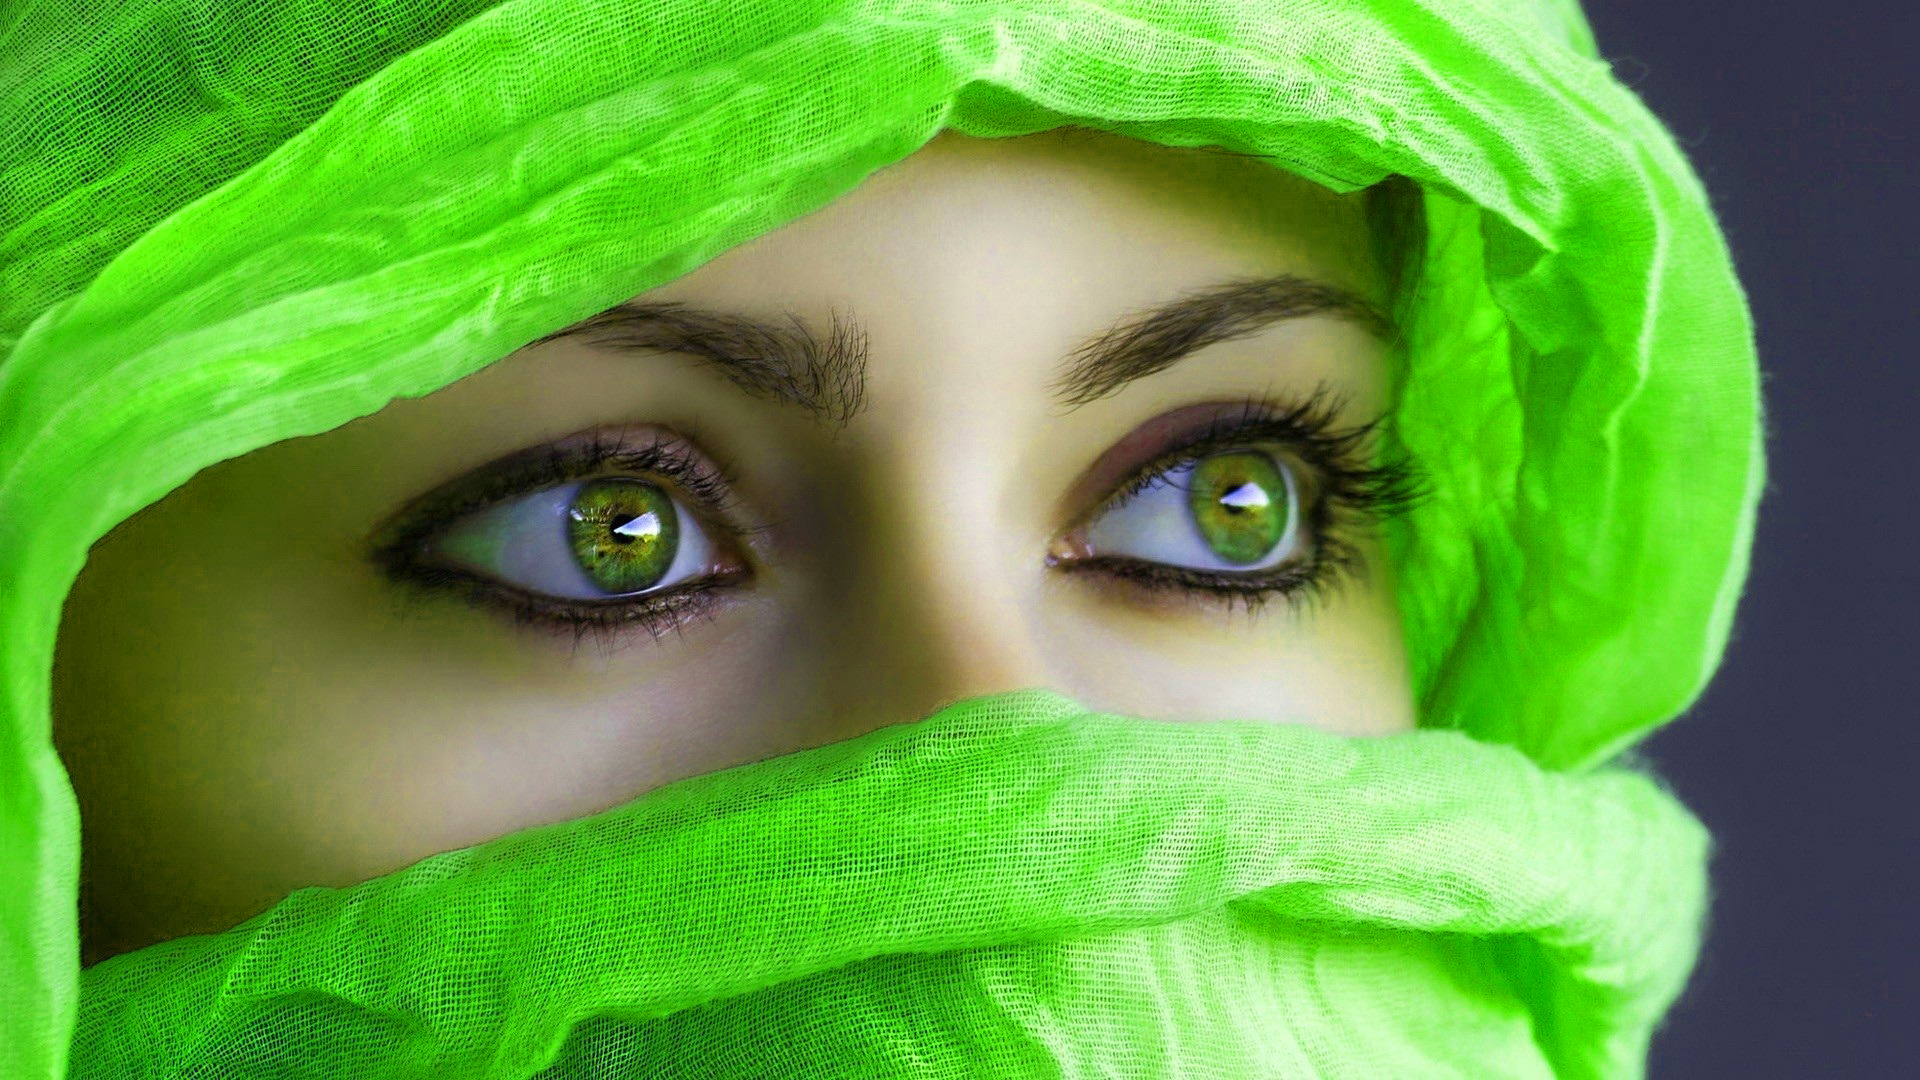 whatsapp wallpaper for girls,green,face,eye,eyebrow,beauty